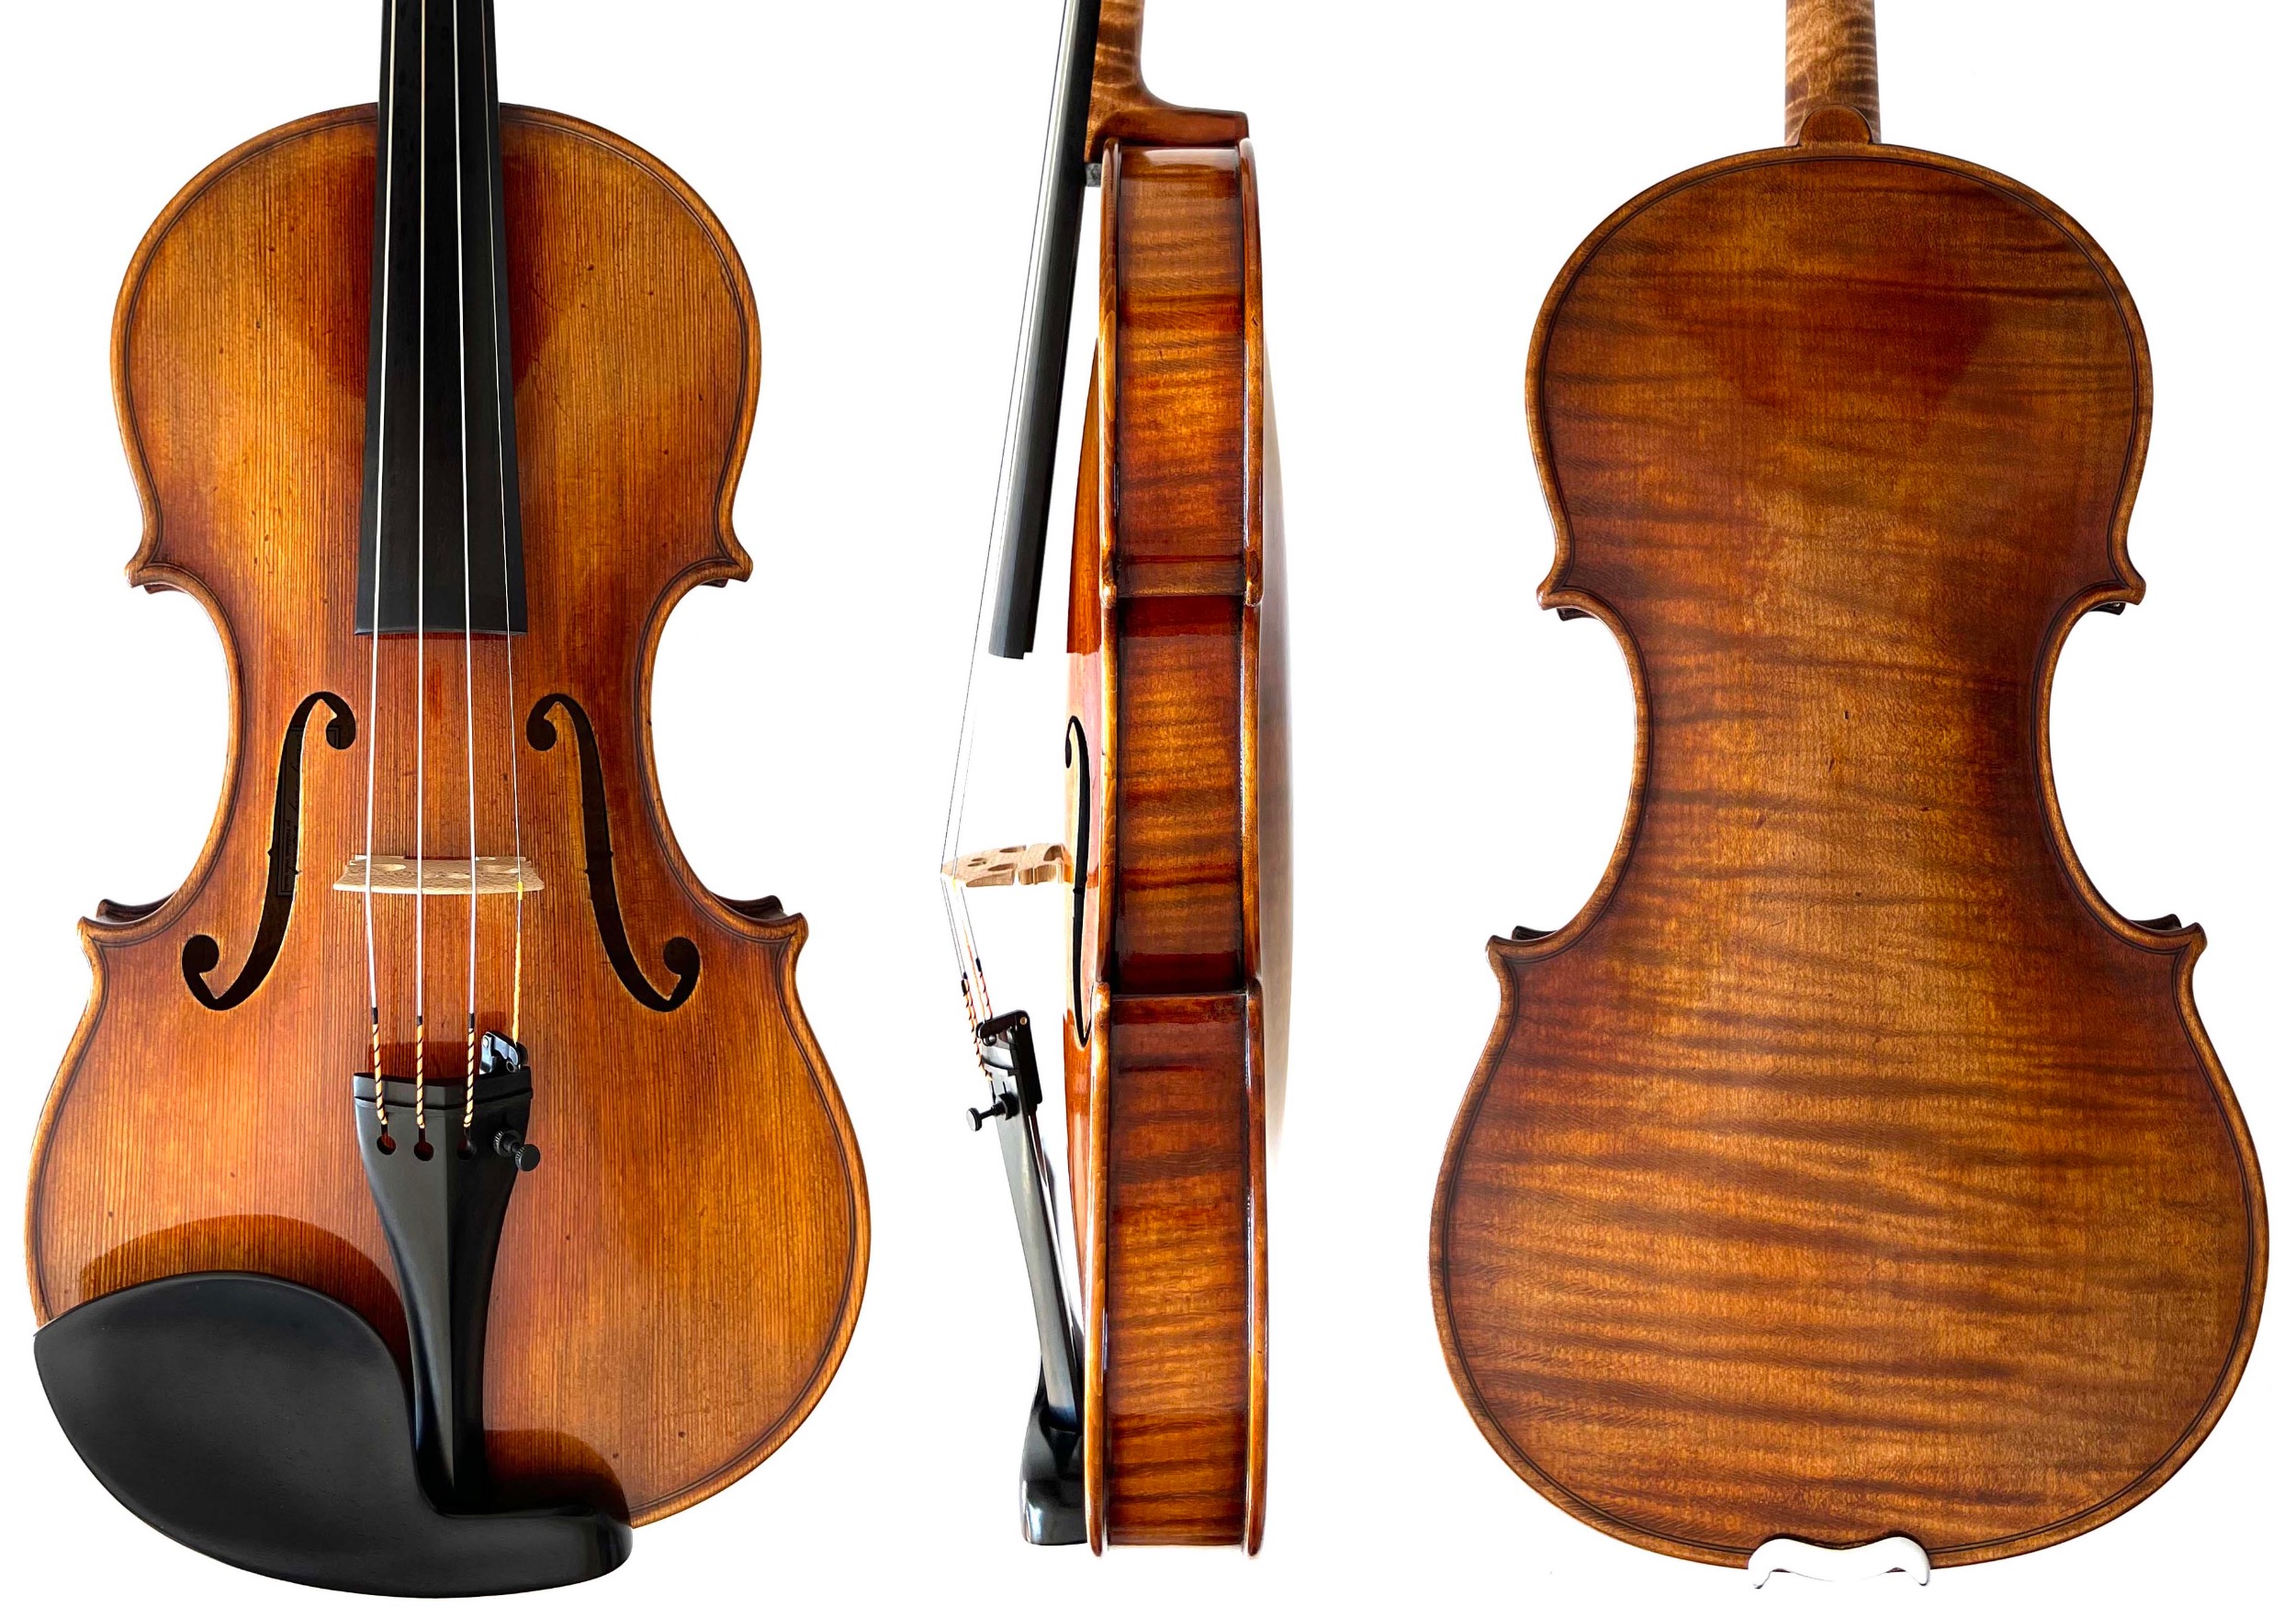 Kowalski Guarneri Del Gesu 2024-1 violin front, side and back